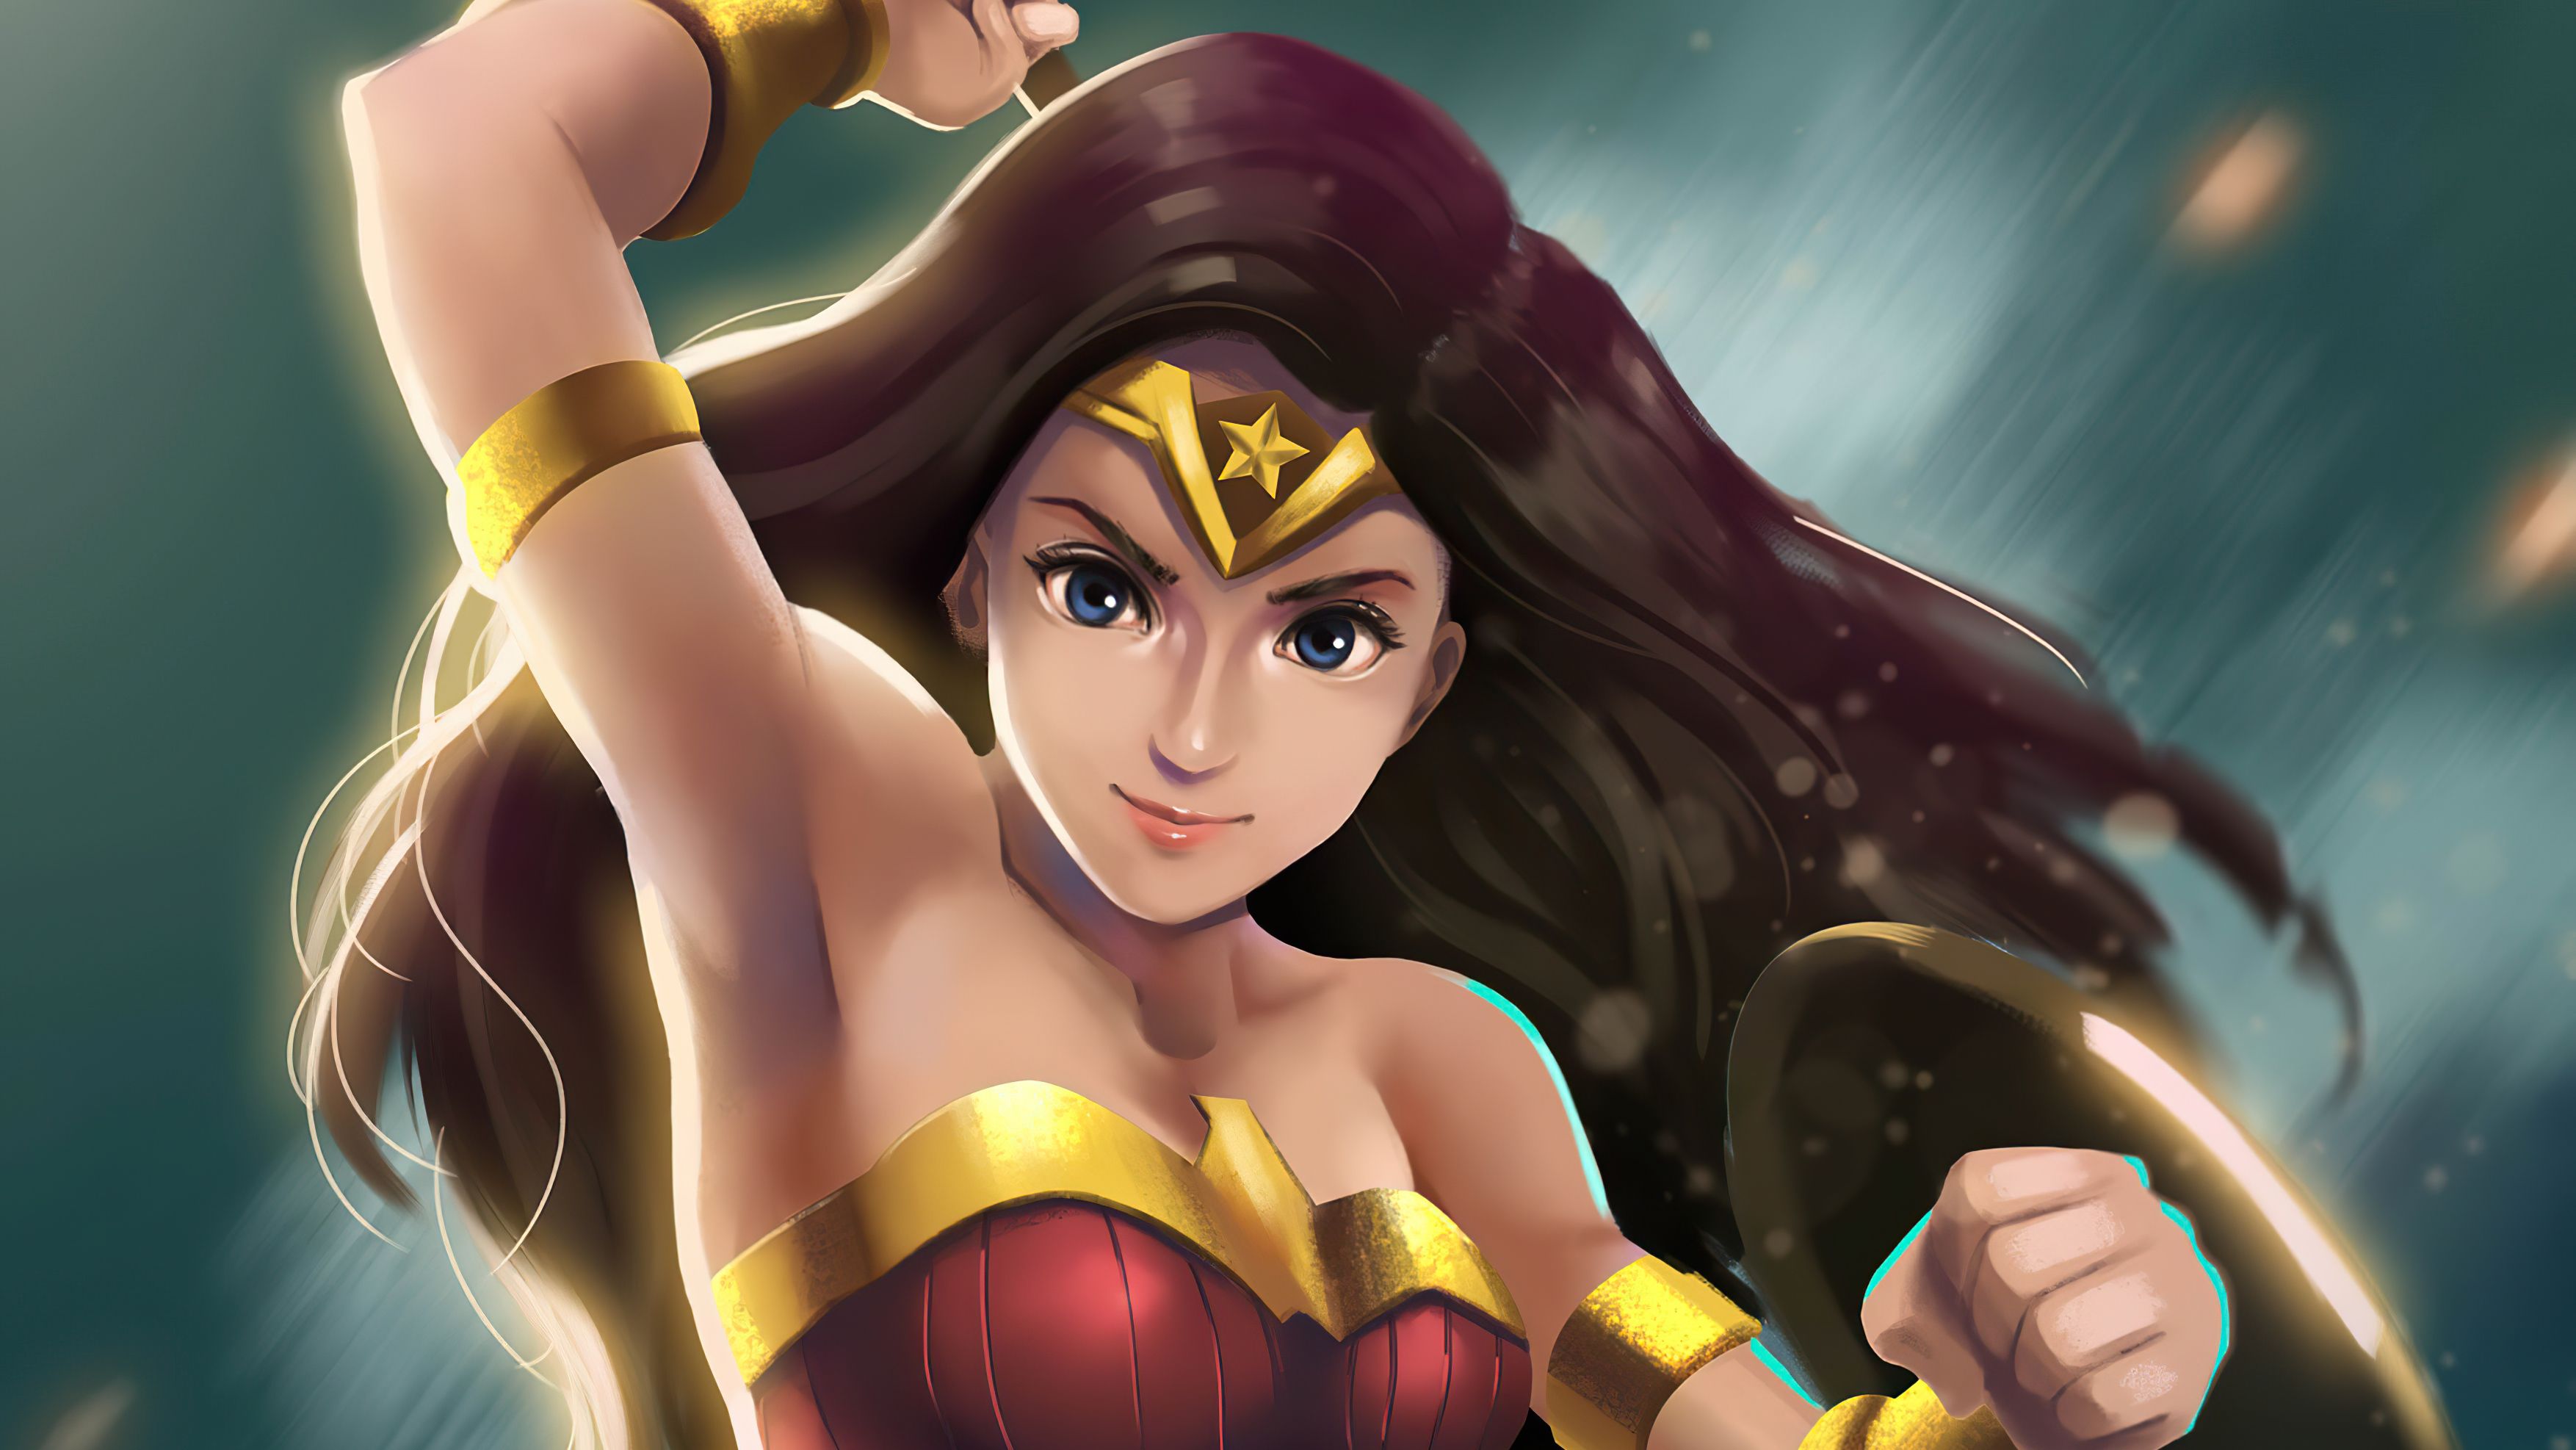 Wonder Woman Cute Girl Artwork, HD Superheroes, 4k Wallpaper